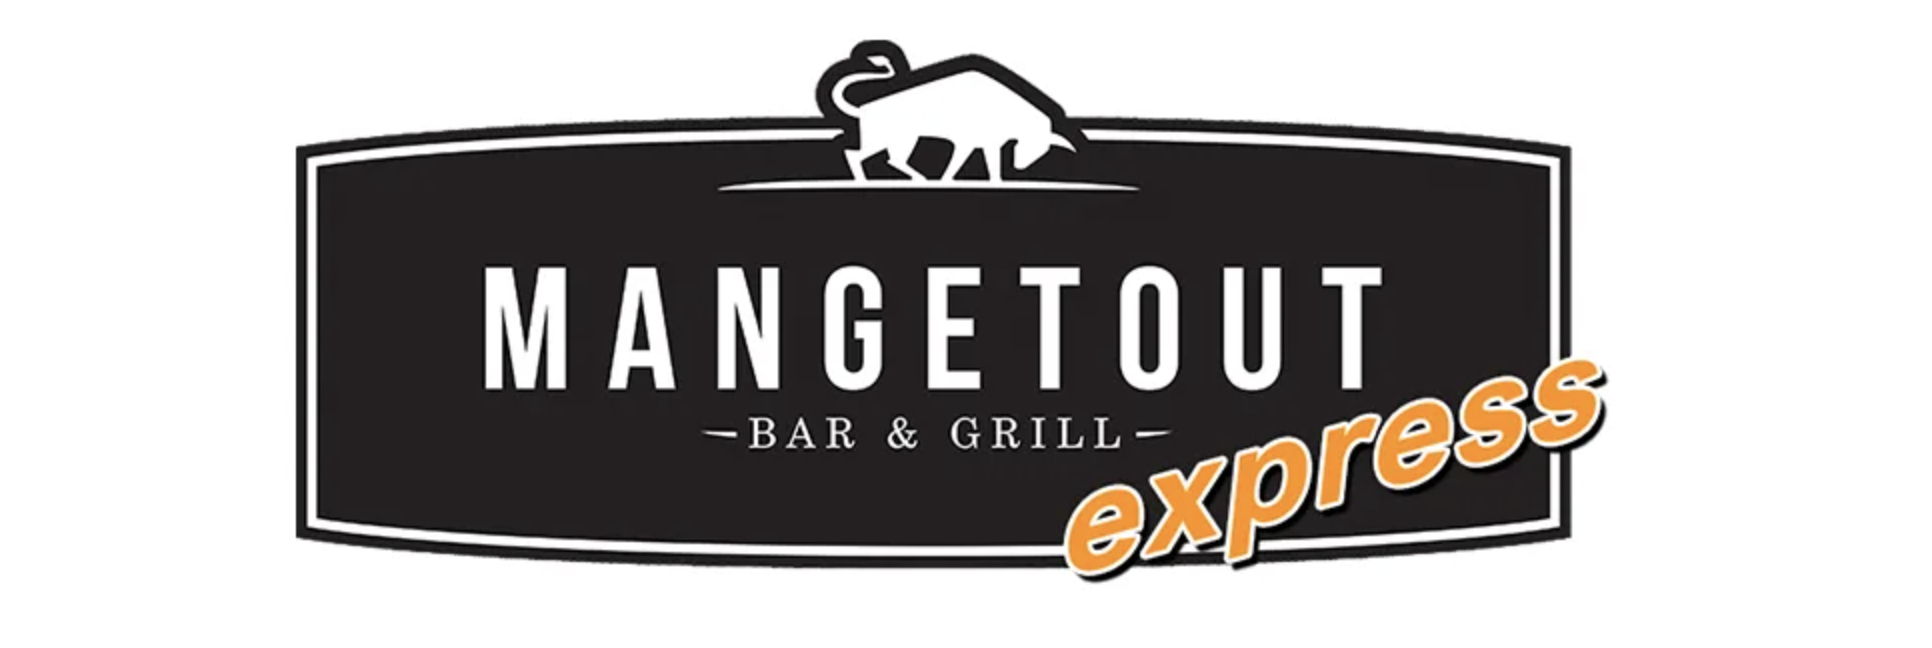 Mangetout Bar & Grill